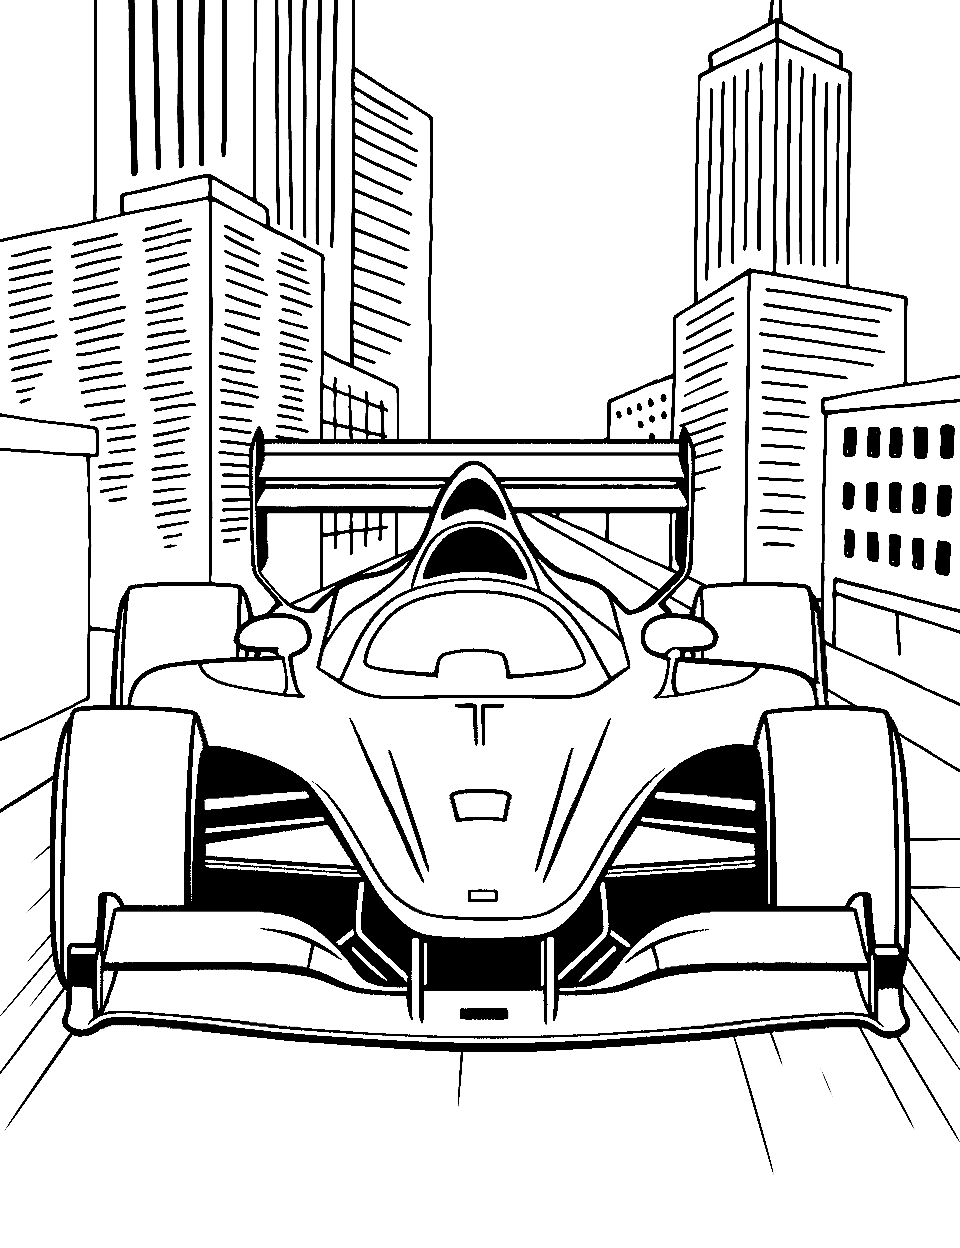 City Circuit Race Car Coloring Page - A race car navigating through a city circuit.